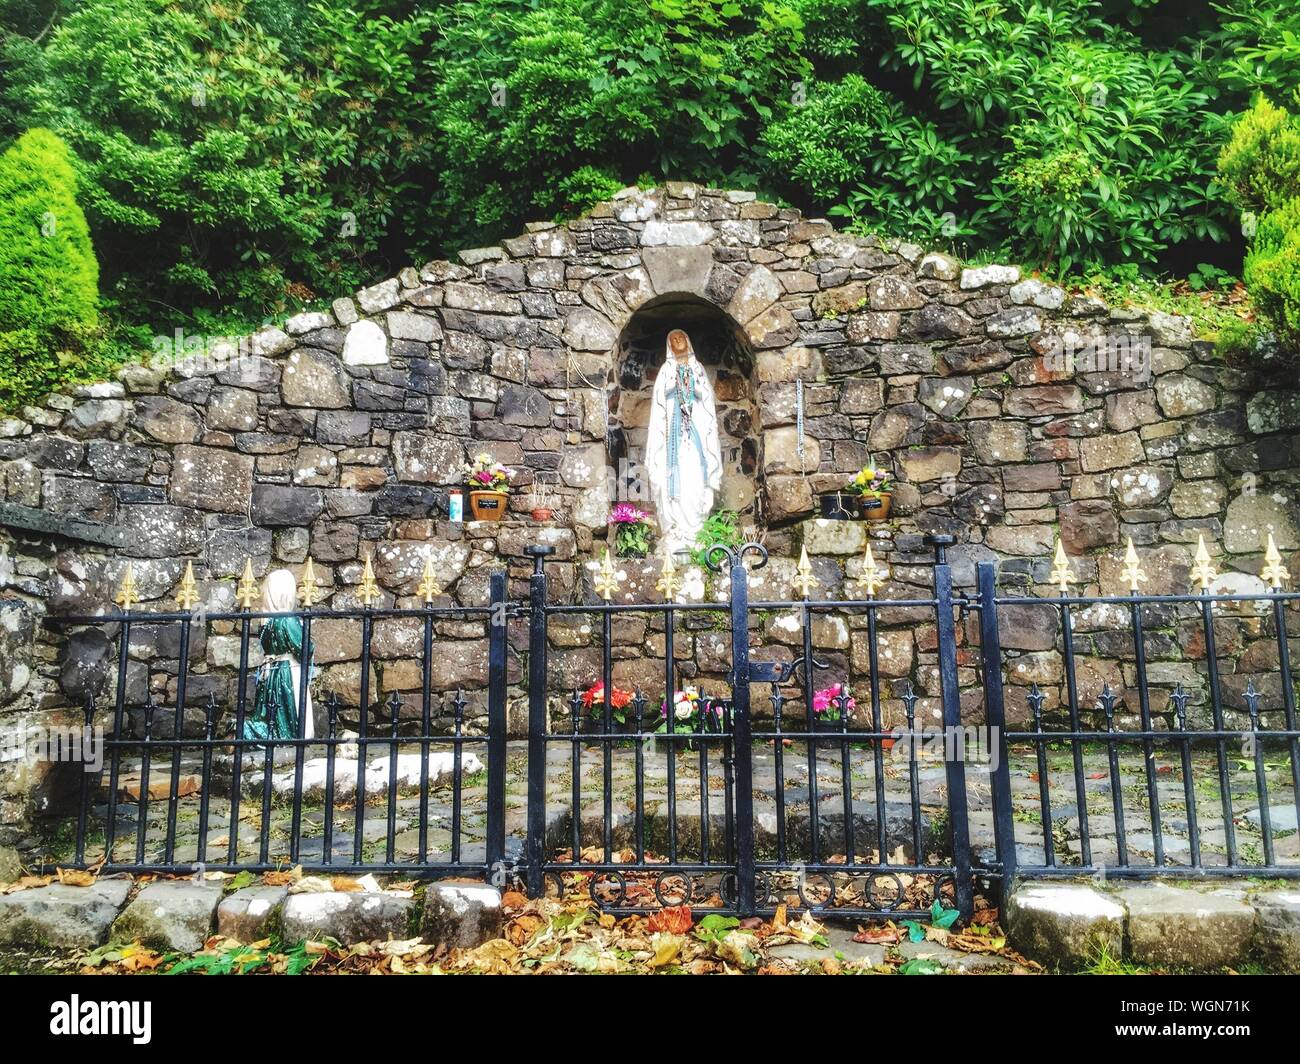 Jungfrau Maria Statue In Grotte vor Metallzaun gegen grüne Bäume Stockfoto